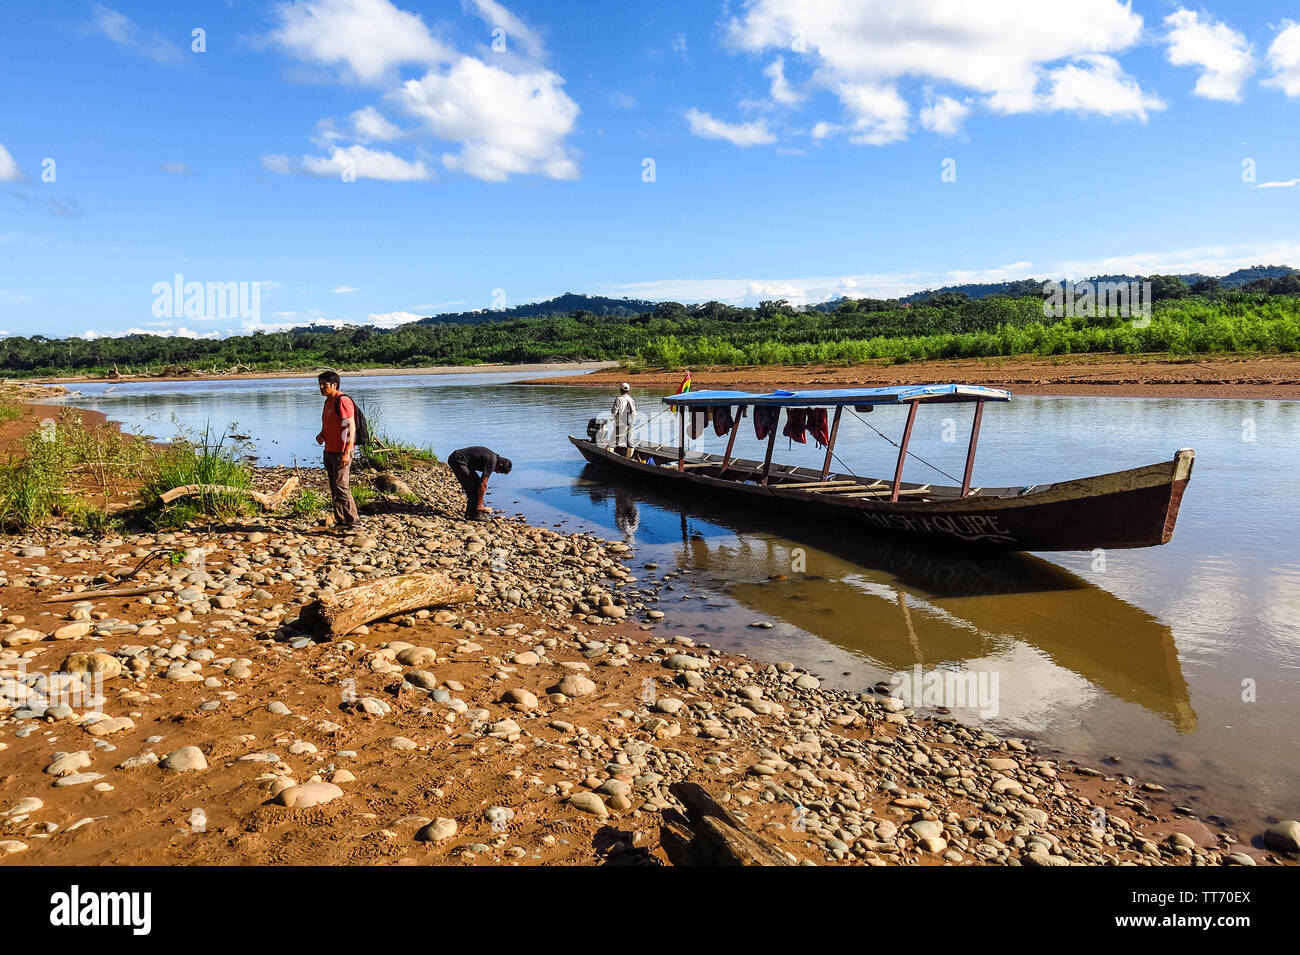 Beni River, Bolivia - MAY 12, 2018: boat transport in Beni River in Beni Region, Bolivia. The rivers are the main roads in the Amazon jungle. Stock Photo